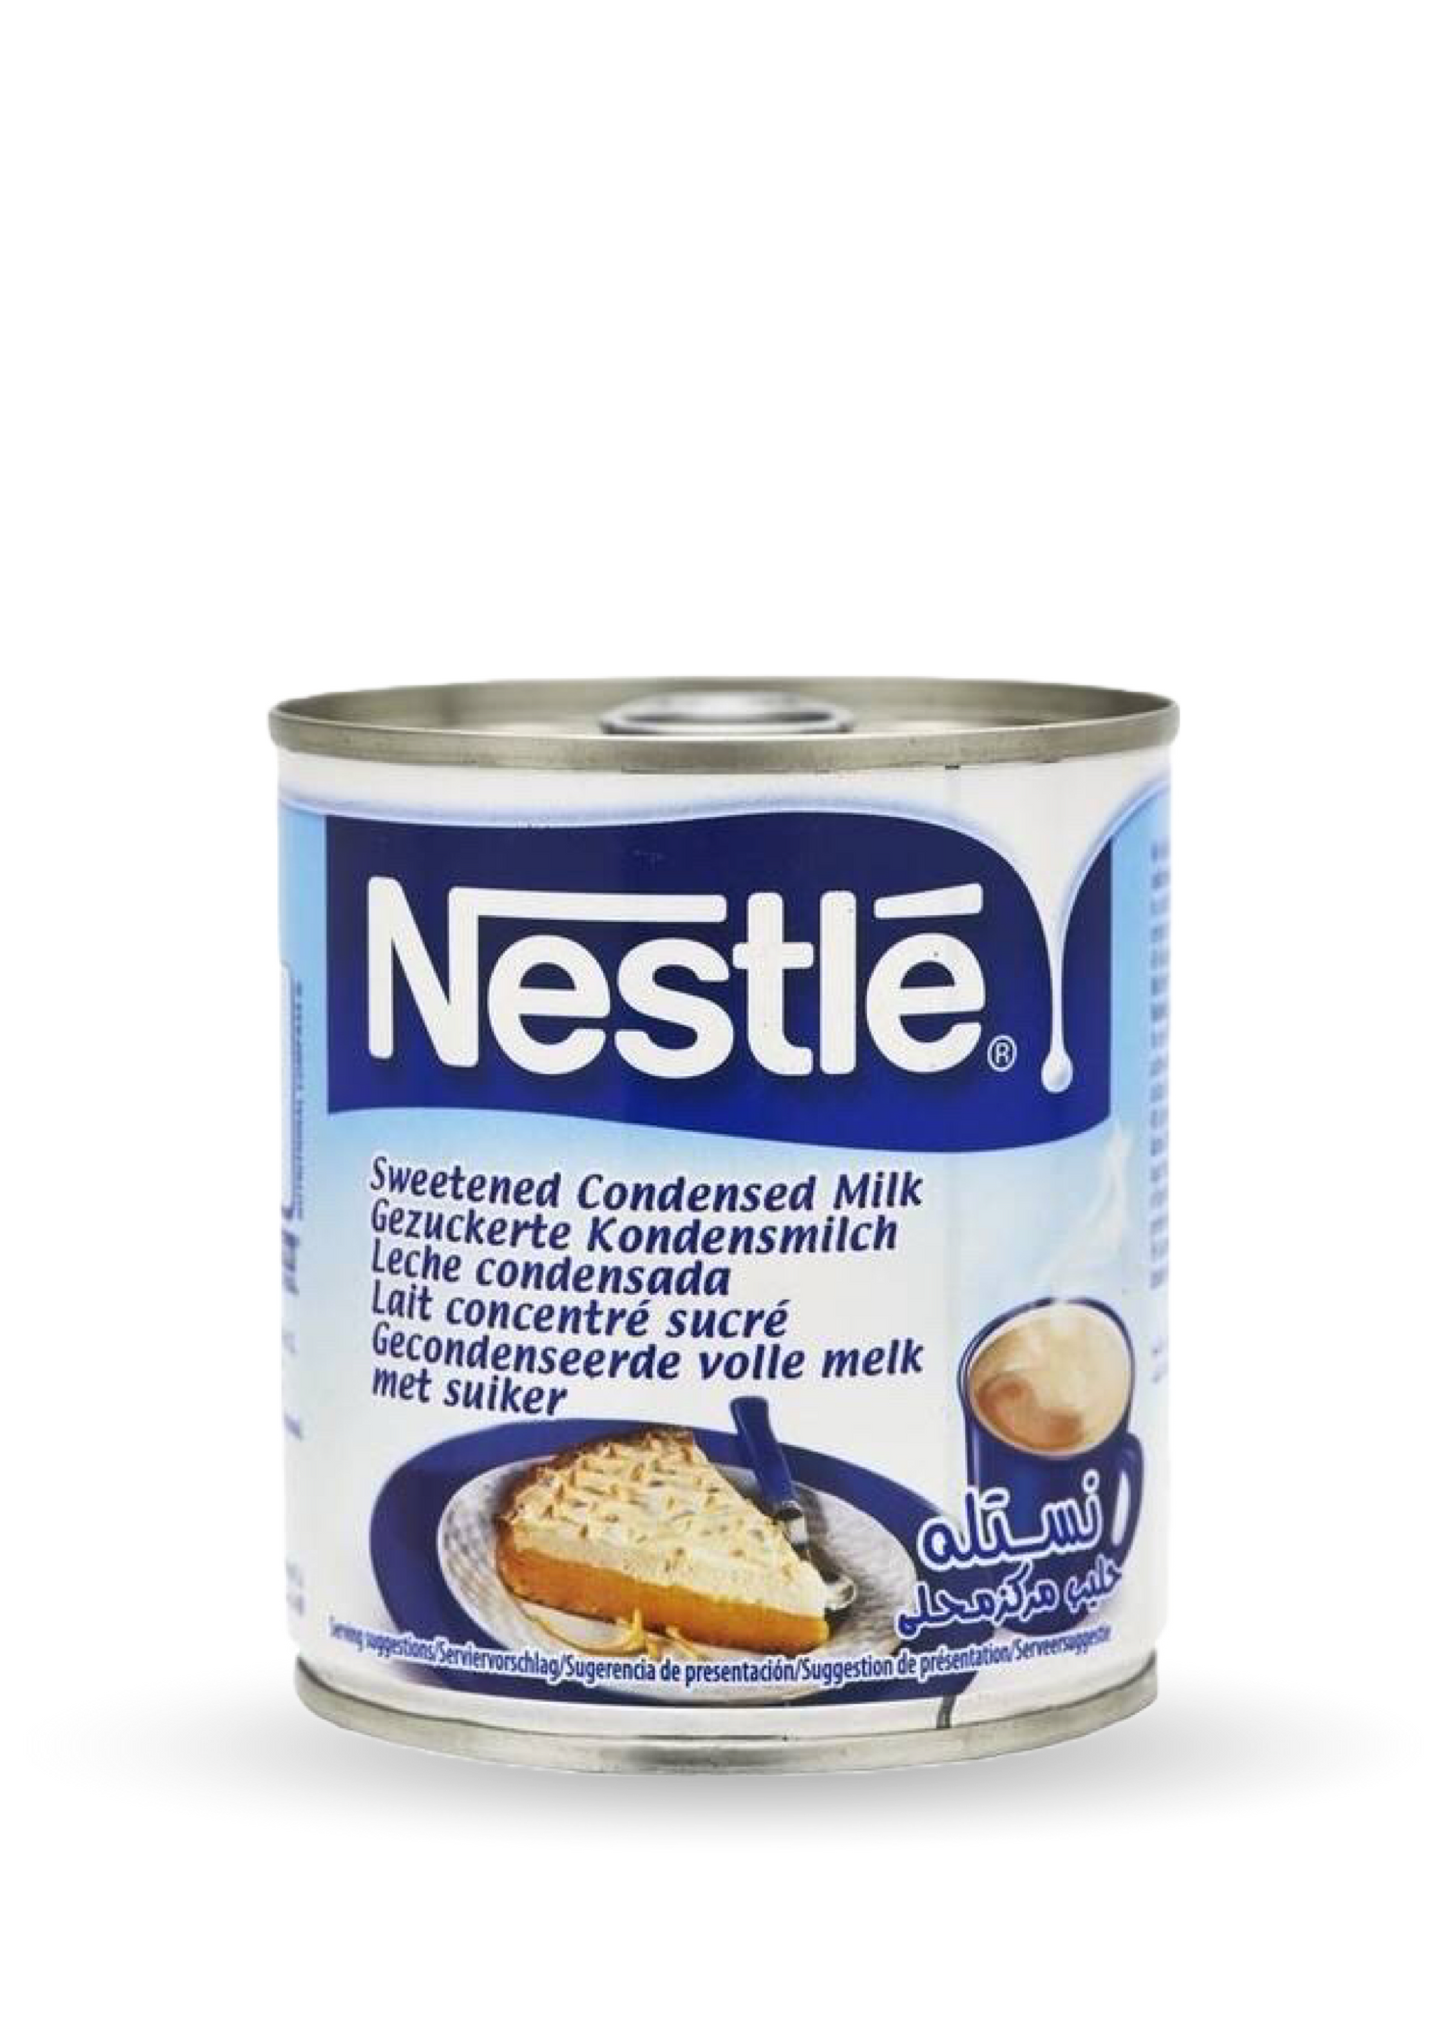 Nestlé | Sweetened Condensed Milk